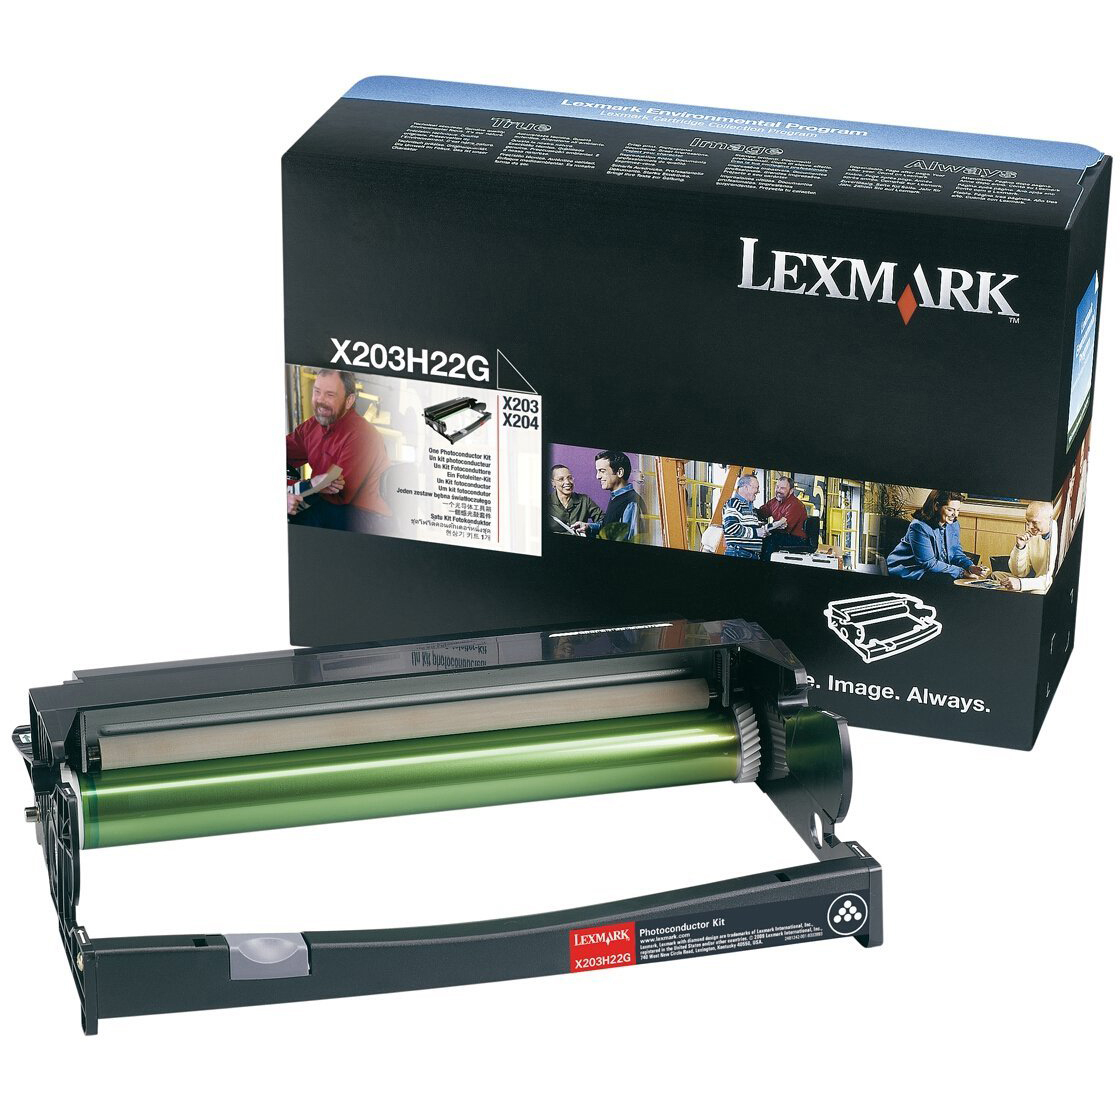 Original Lexmark X203H22G Photoconductor Kit (X203H22G)